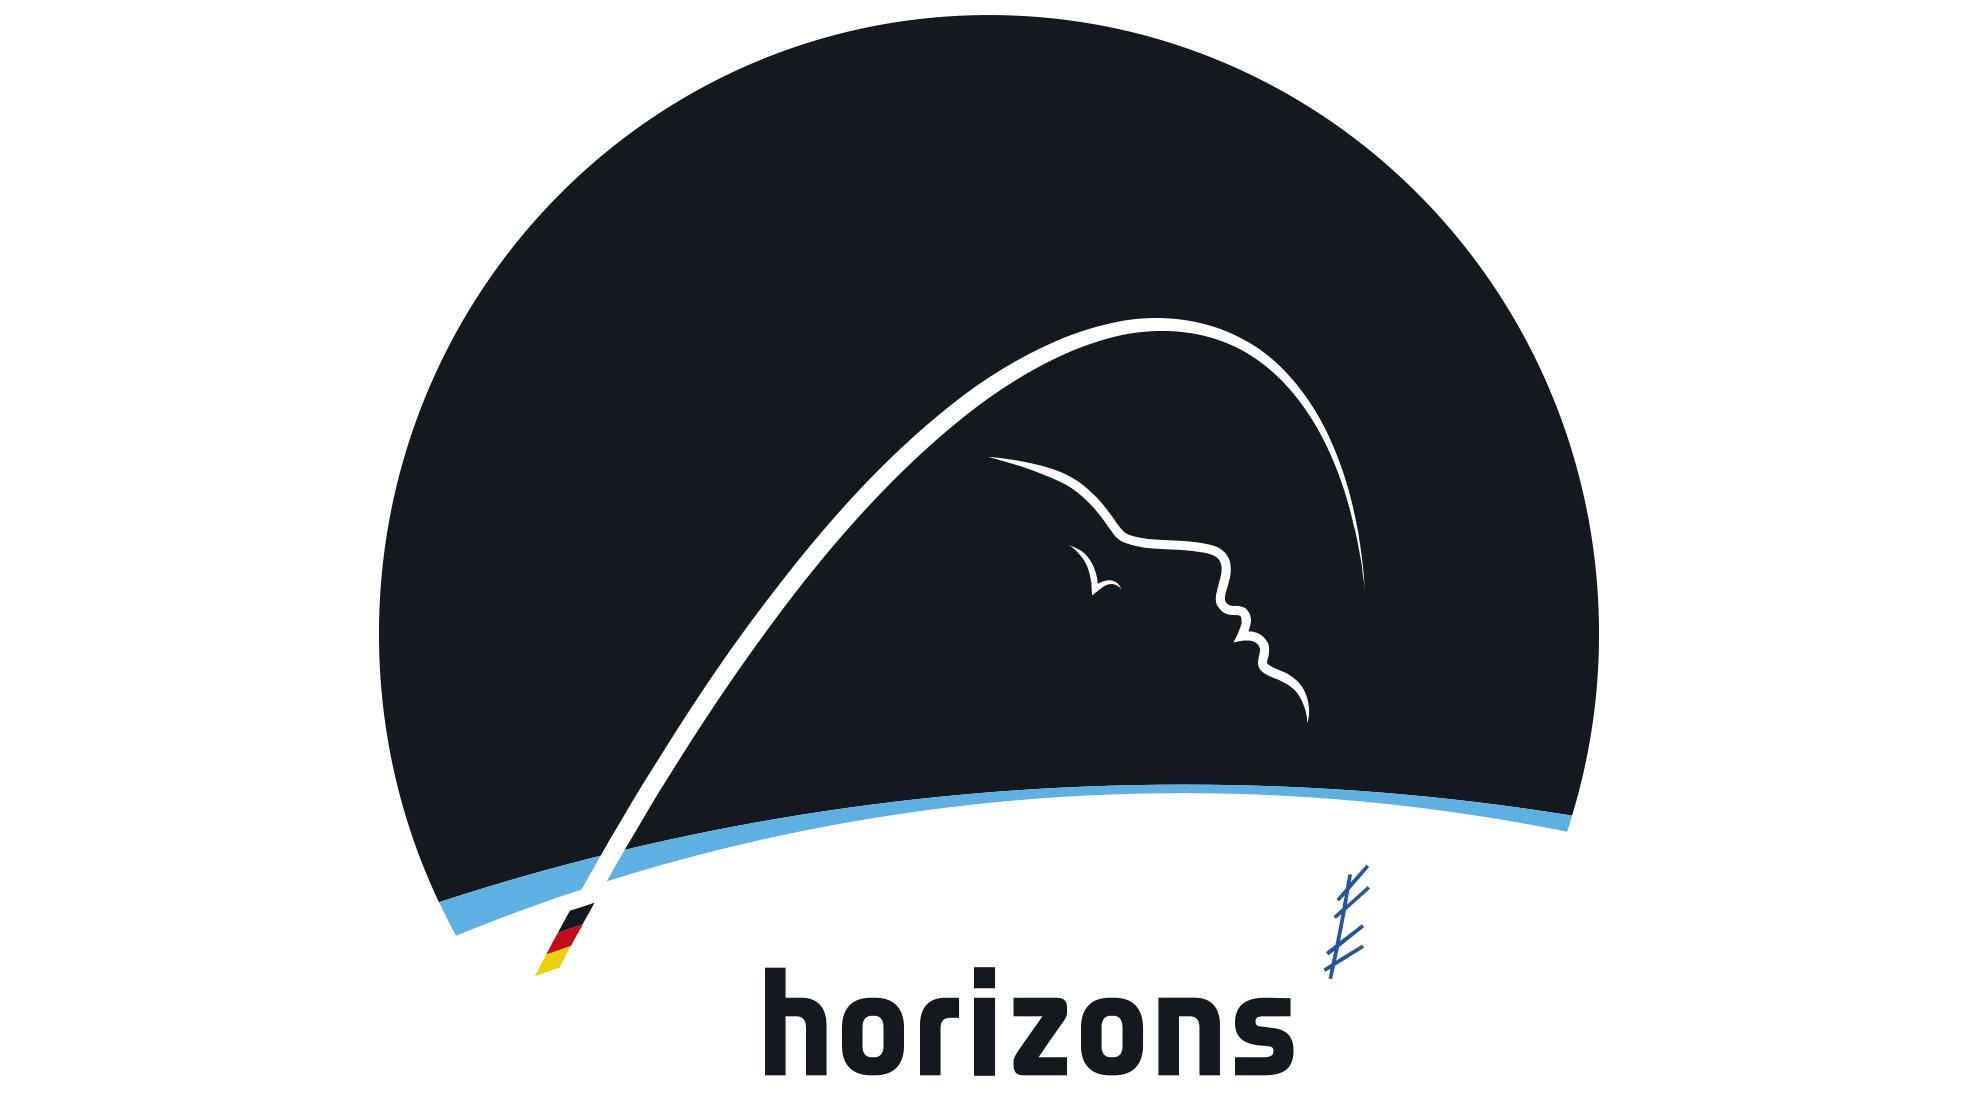 ‘Horizons’ mission logo